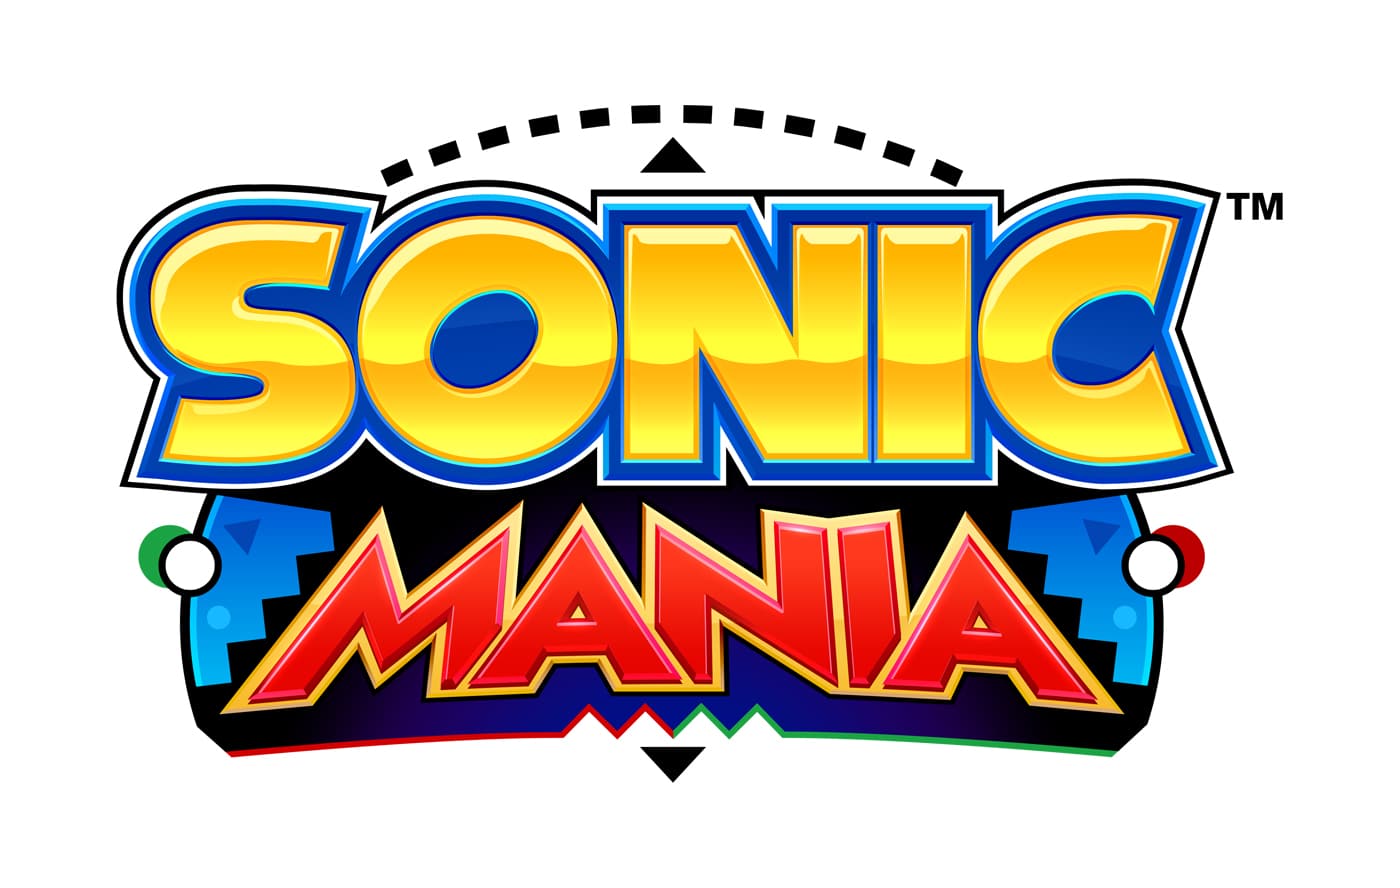 Sonic Mania Logo